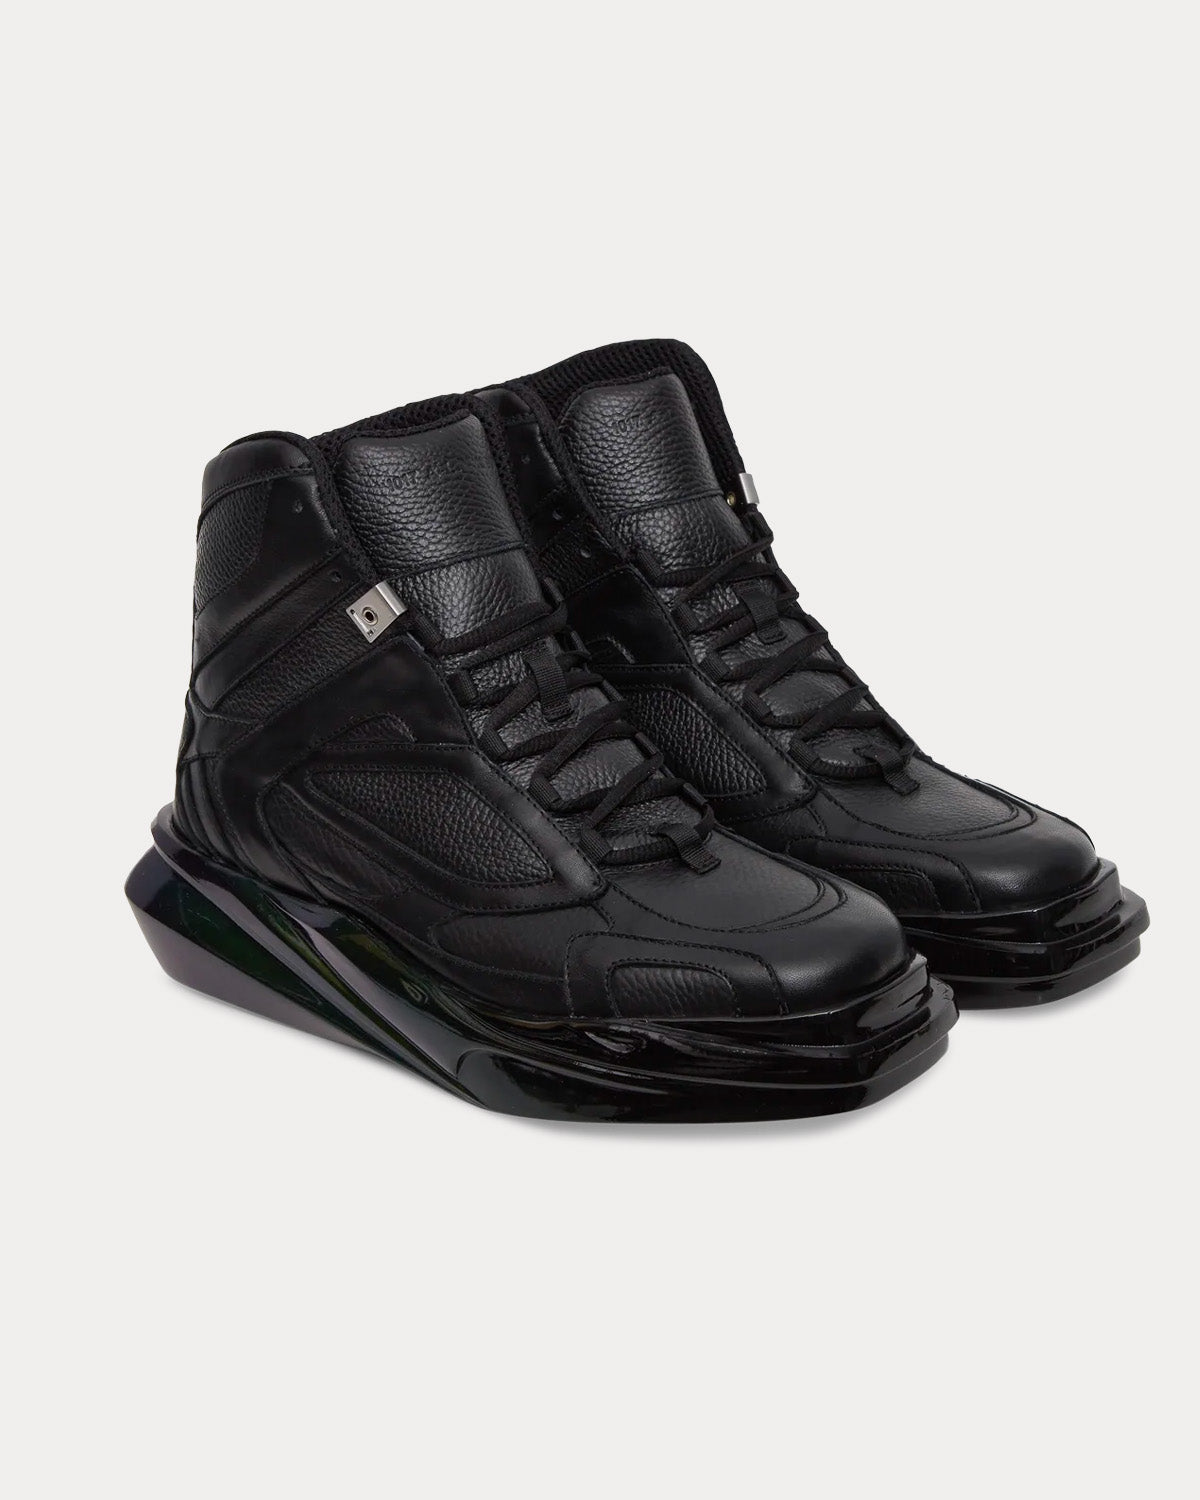 1017 ALYX 9SM Mono Hiking Black / Green High Top Sneakers - Sneak 